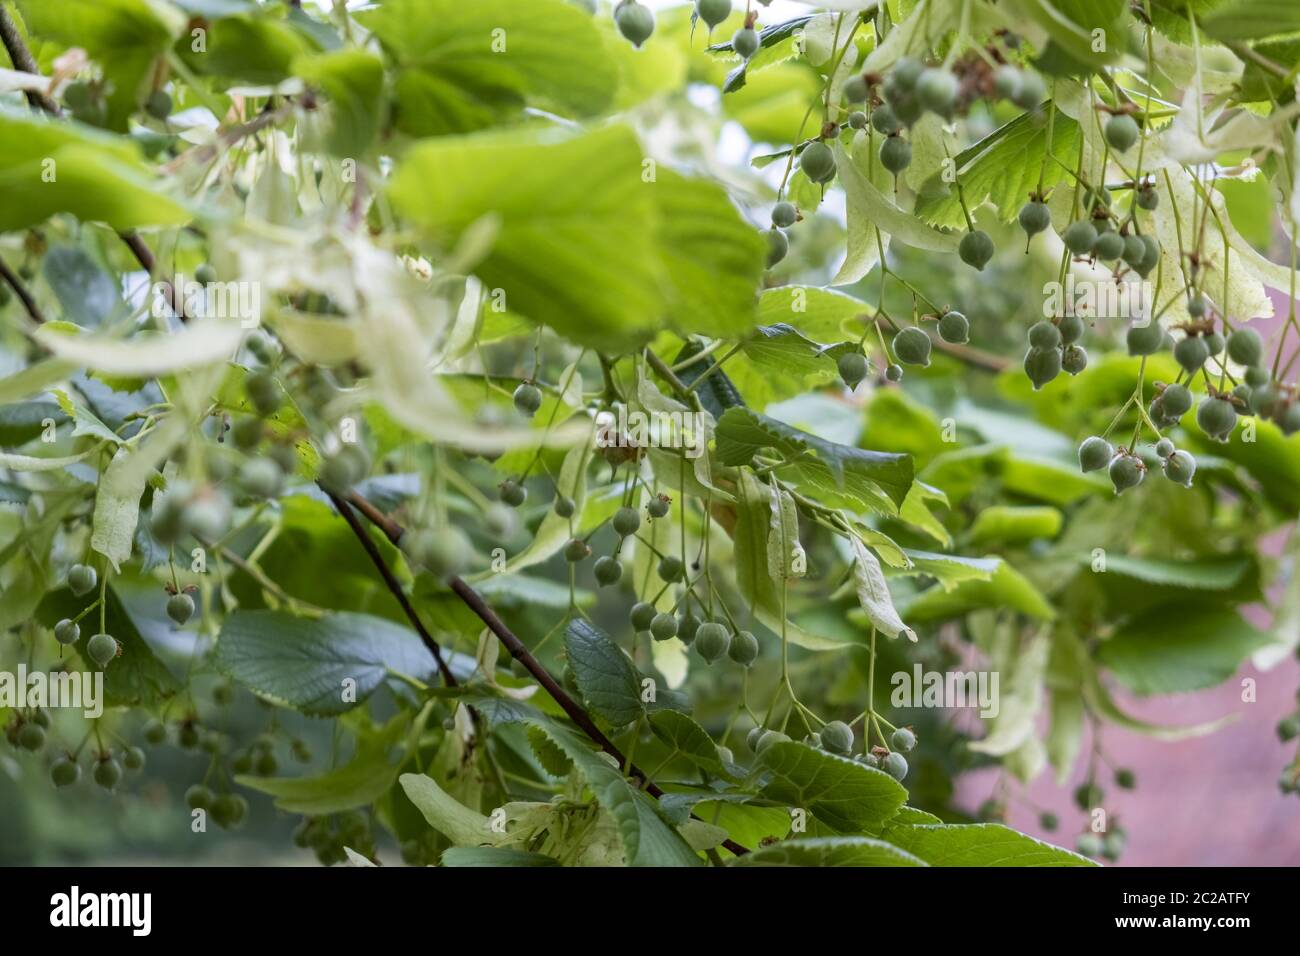 Fruits of the lime tree (Tilia) Stock Photo